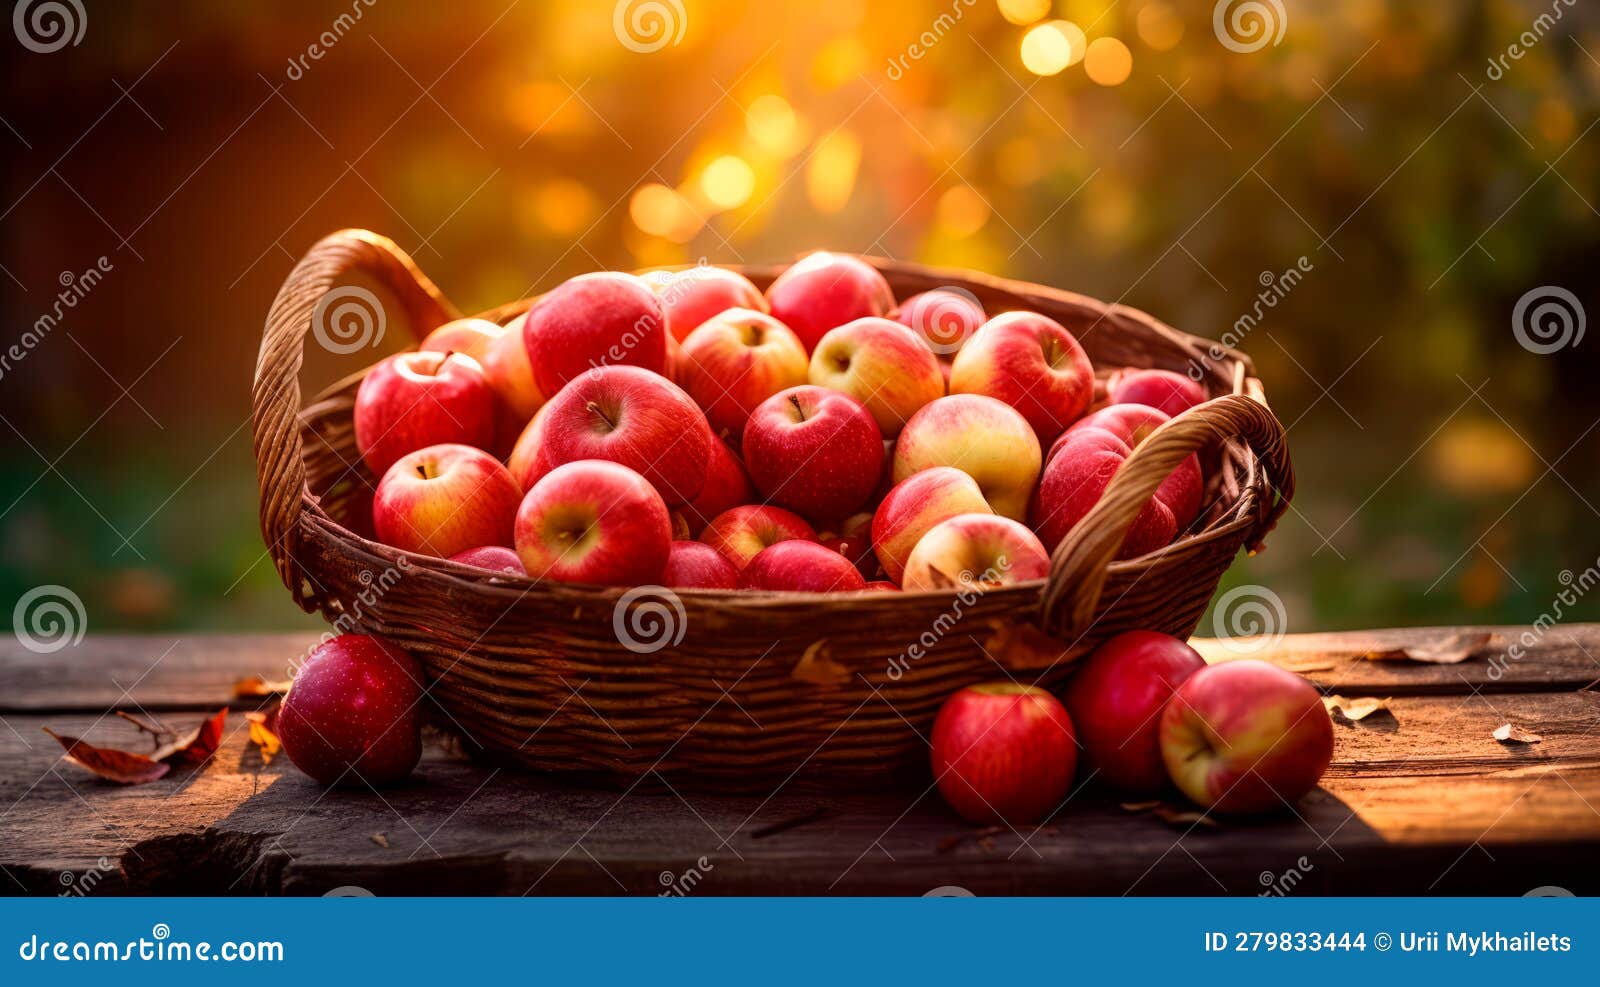 Fruitful Harvest: Plentiful Red Apples Resting in a Traditional Basket ...